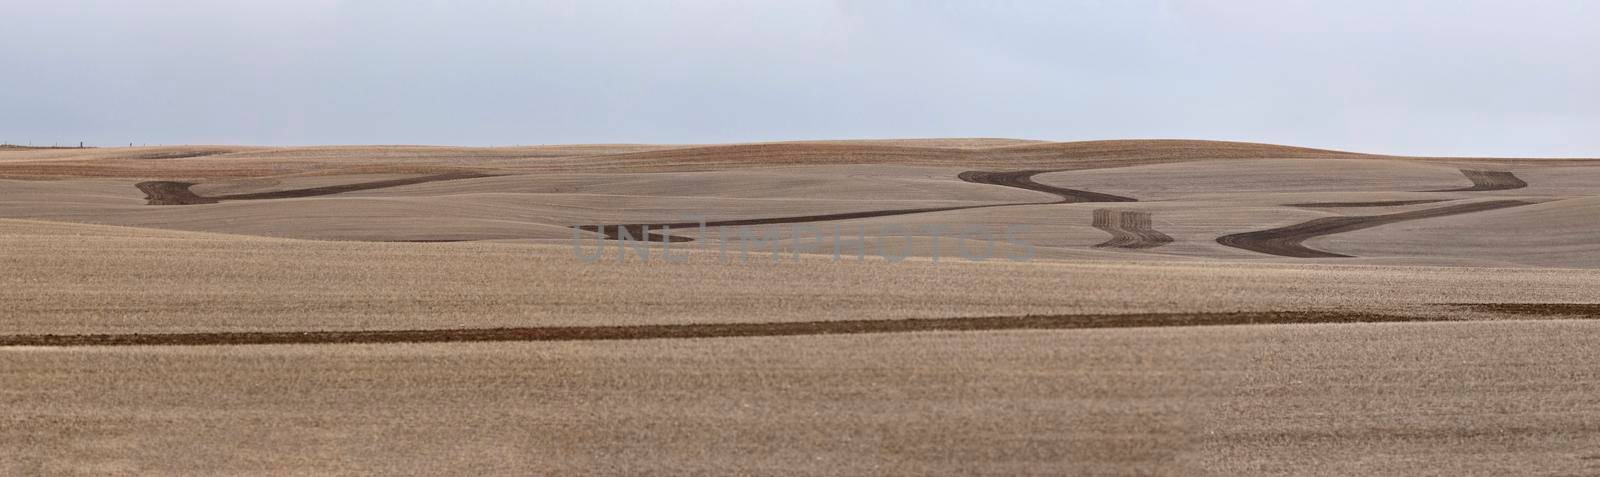 Design Field Saskatchewan spring crop stubble panoramic